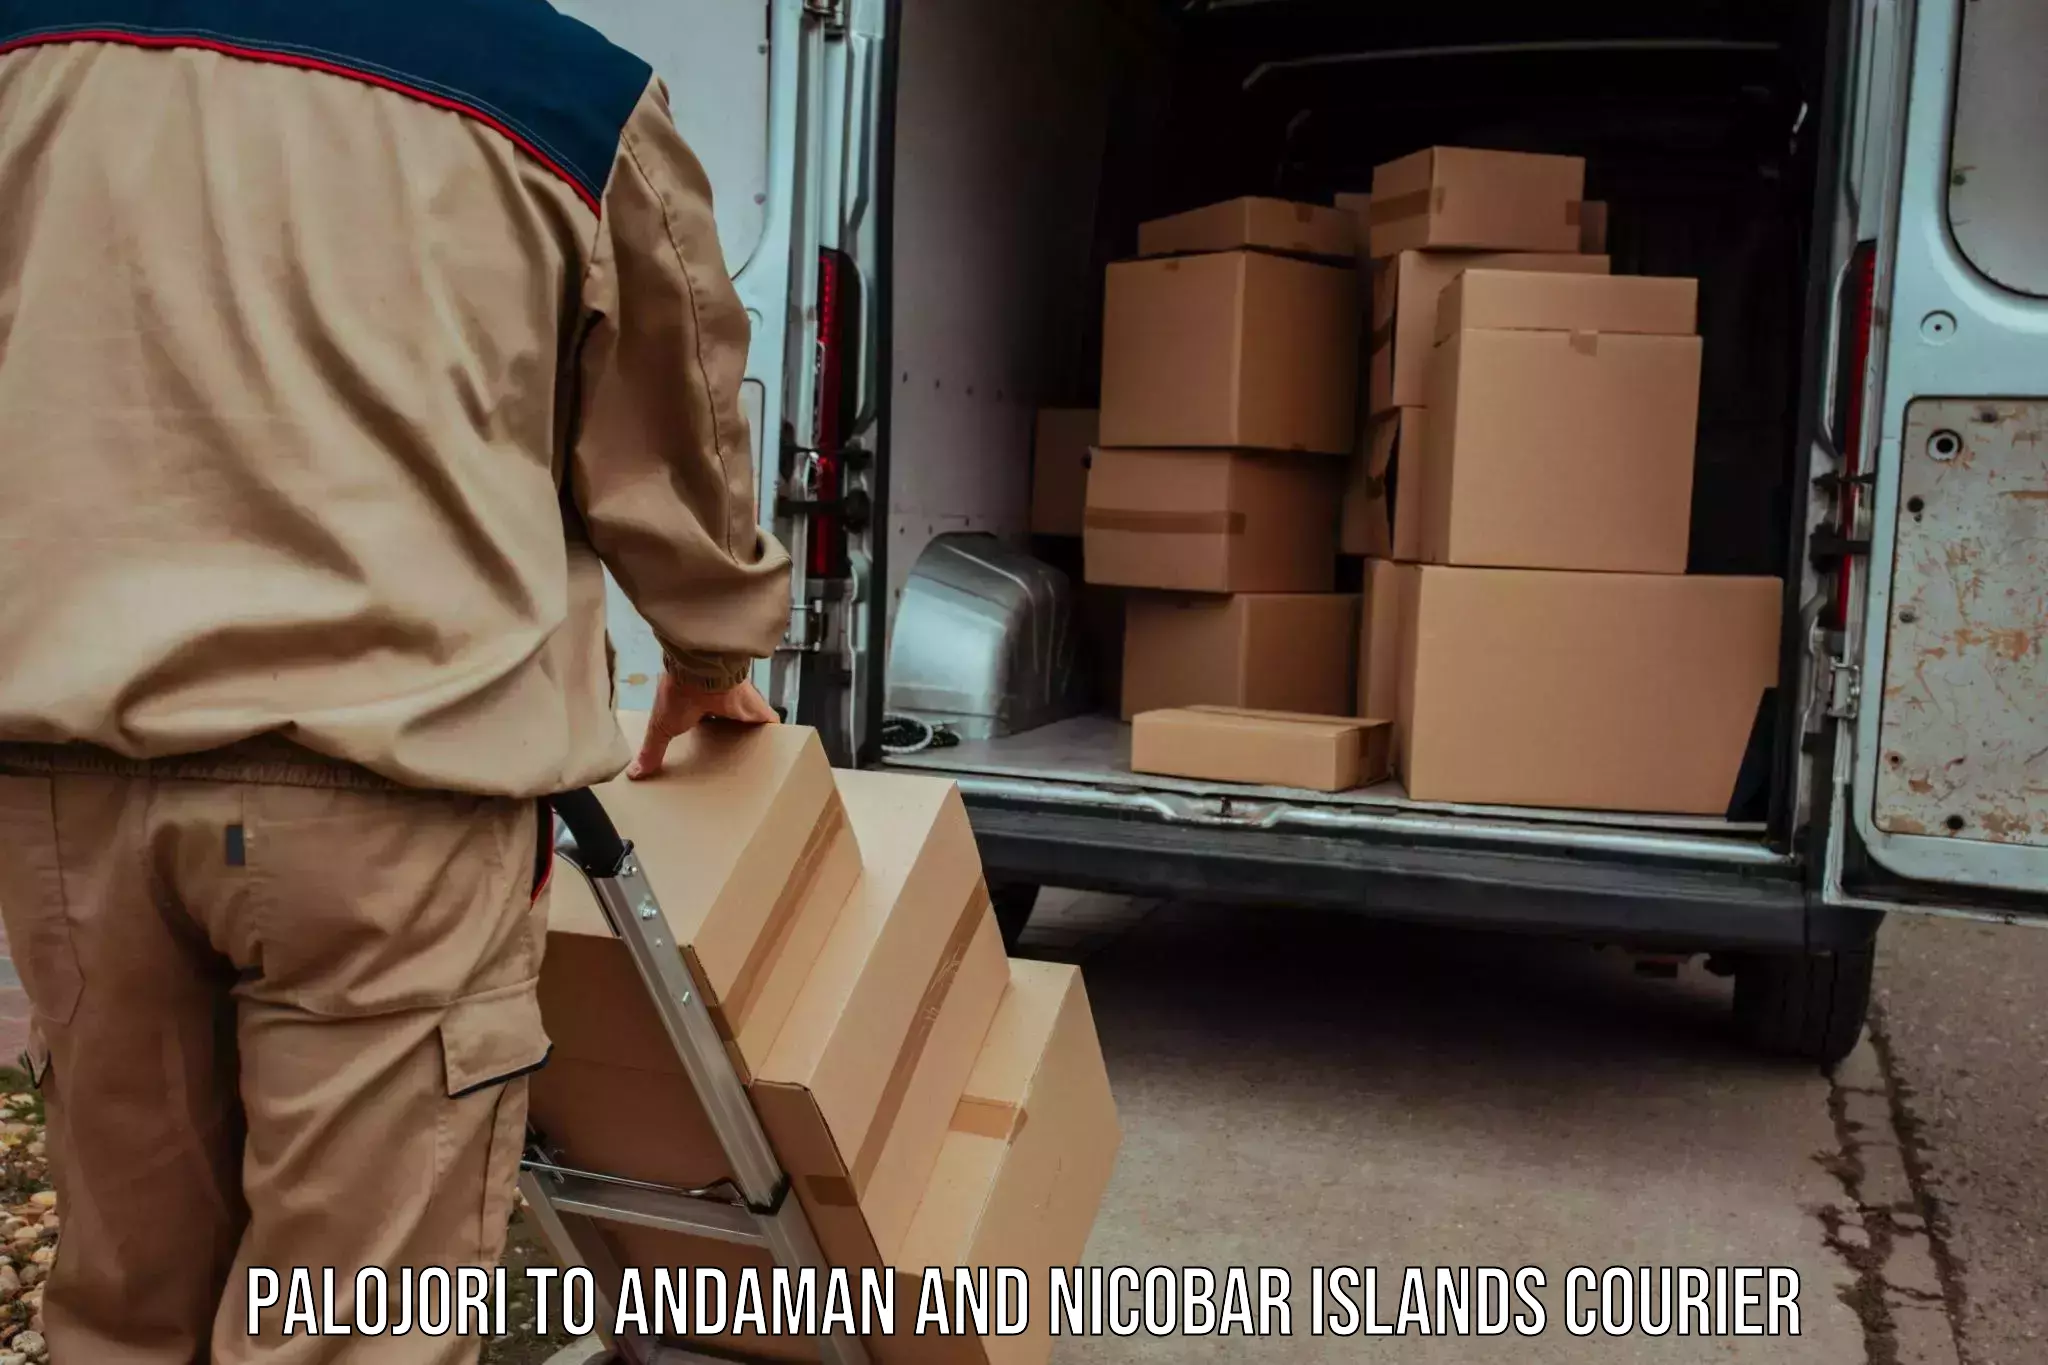 Nationwide parcel services Palojori to Andaman and Nicobar Islands